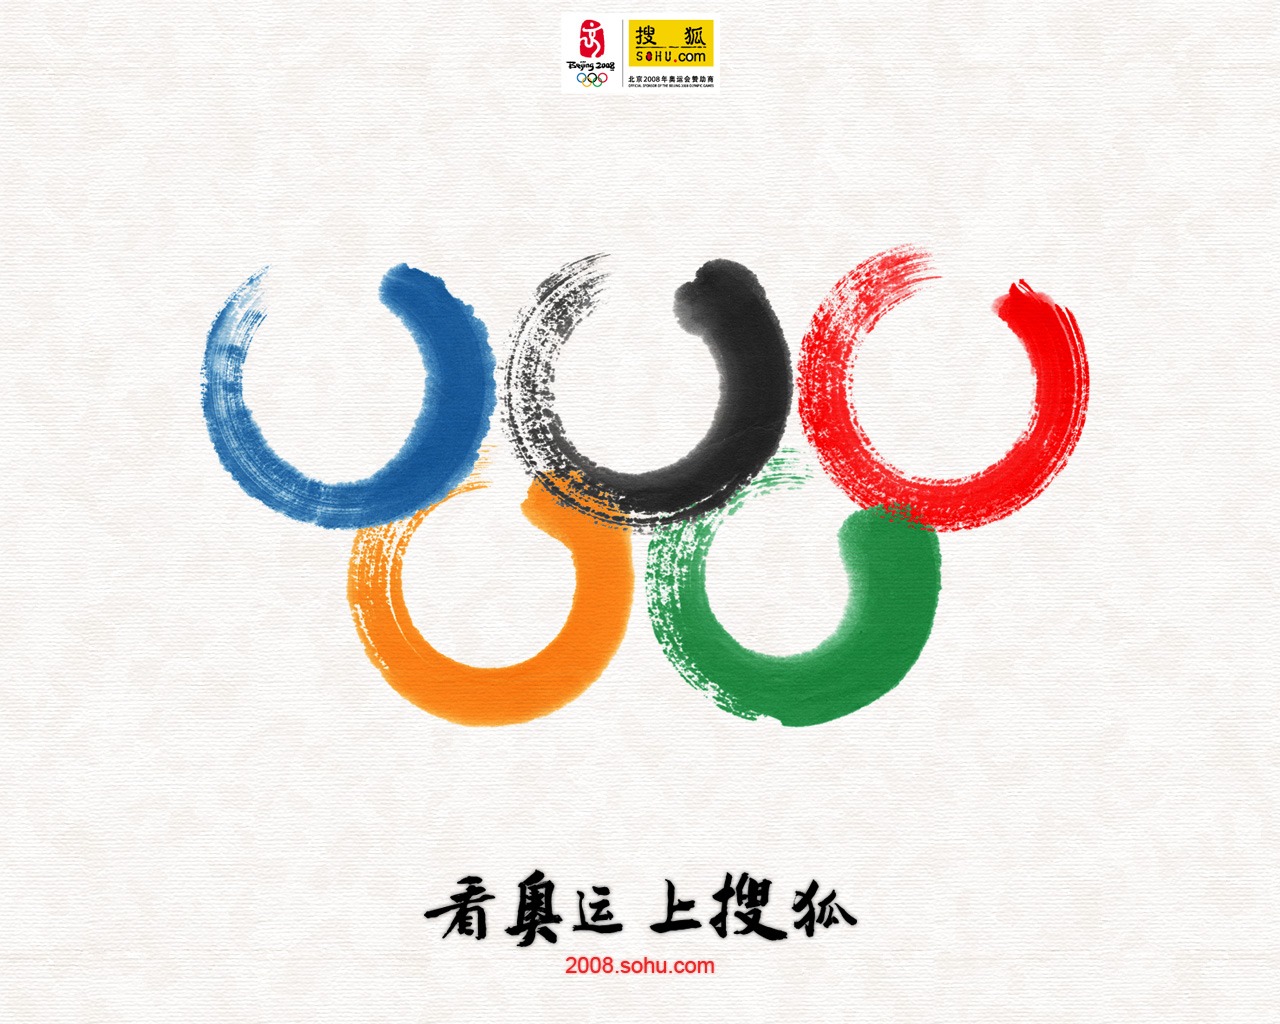 Sohu Olympic Series Wallpaper #2 - 1280x1024